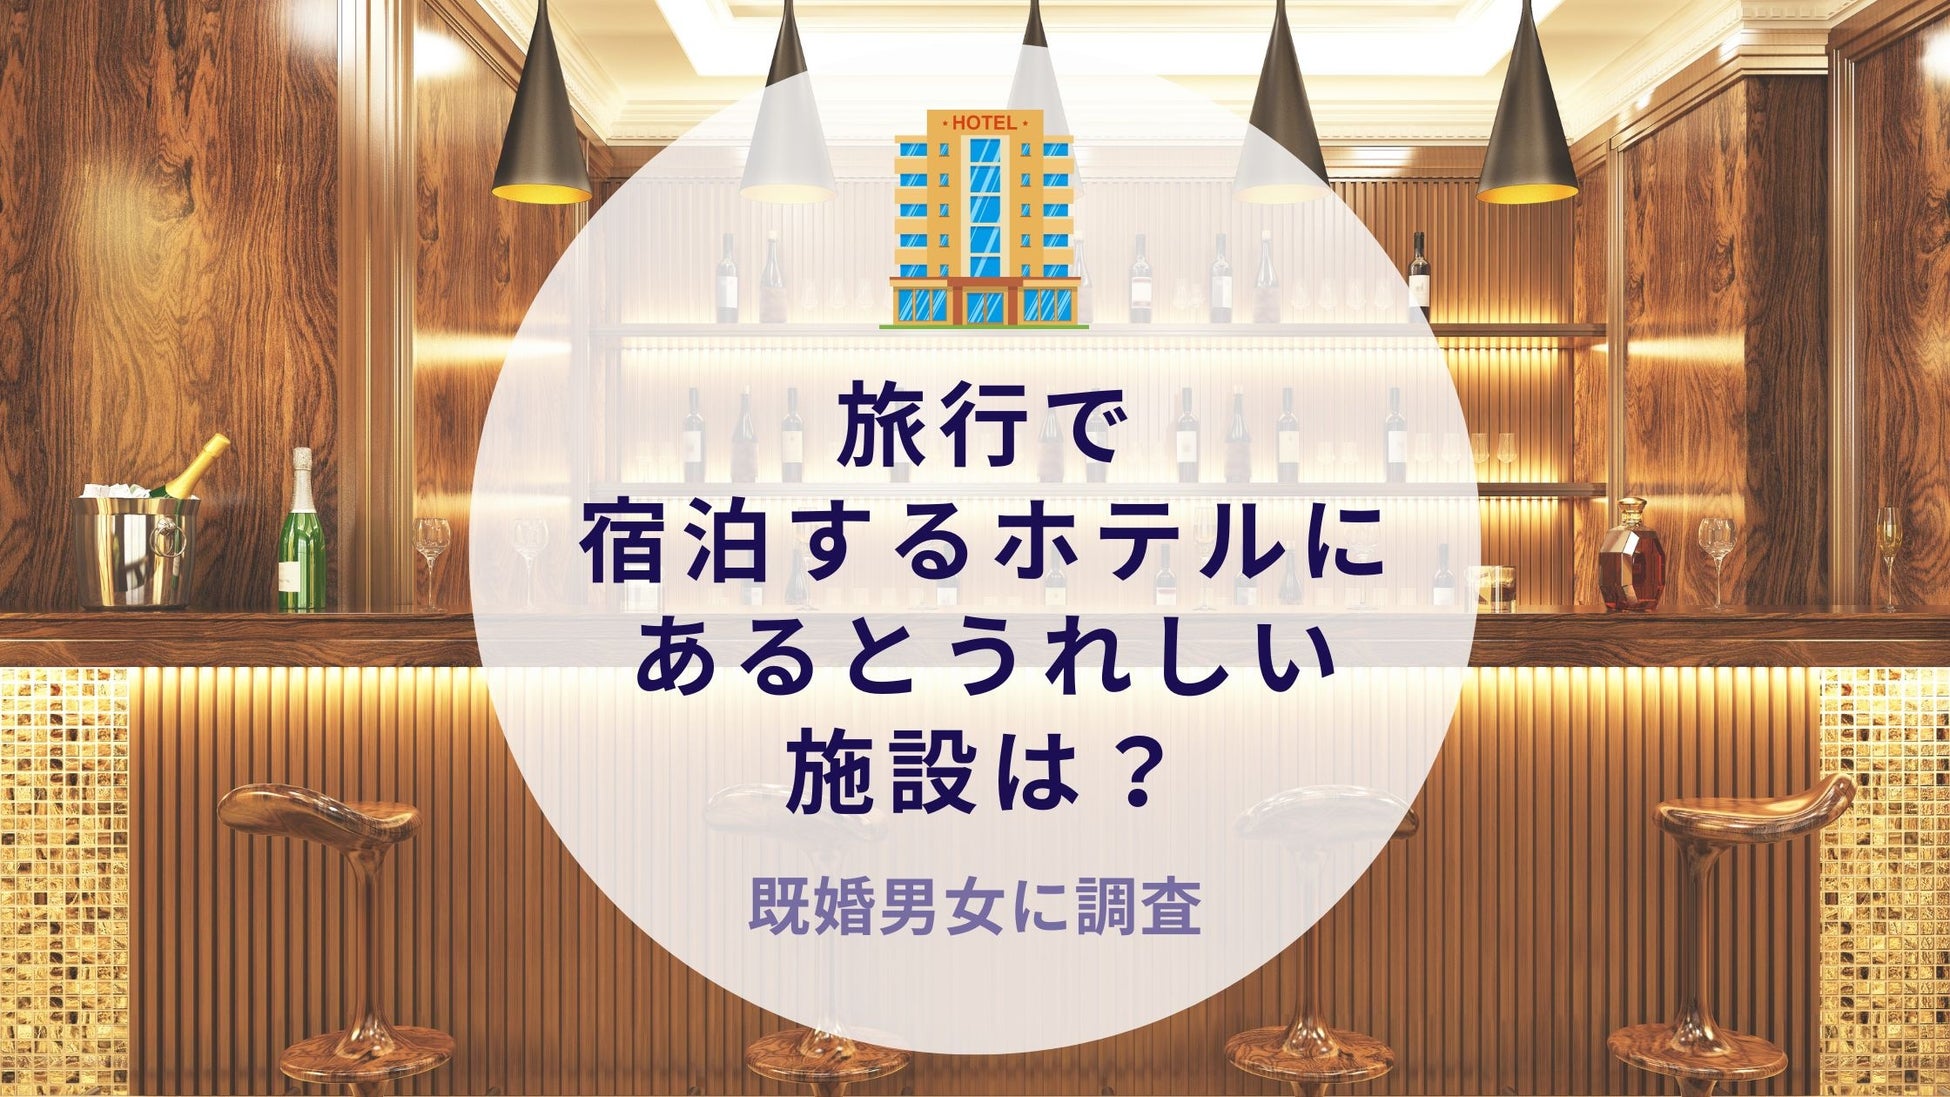 【ANA クラウンプラザホテル成田】天候を気にせずに納涼会や暑気払いができる「納涼会プラン」を7月1日(月)より販売開始。